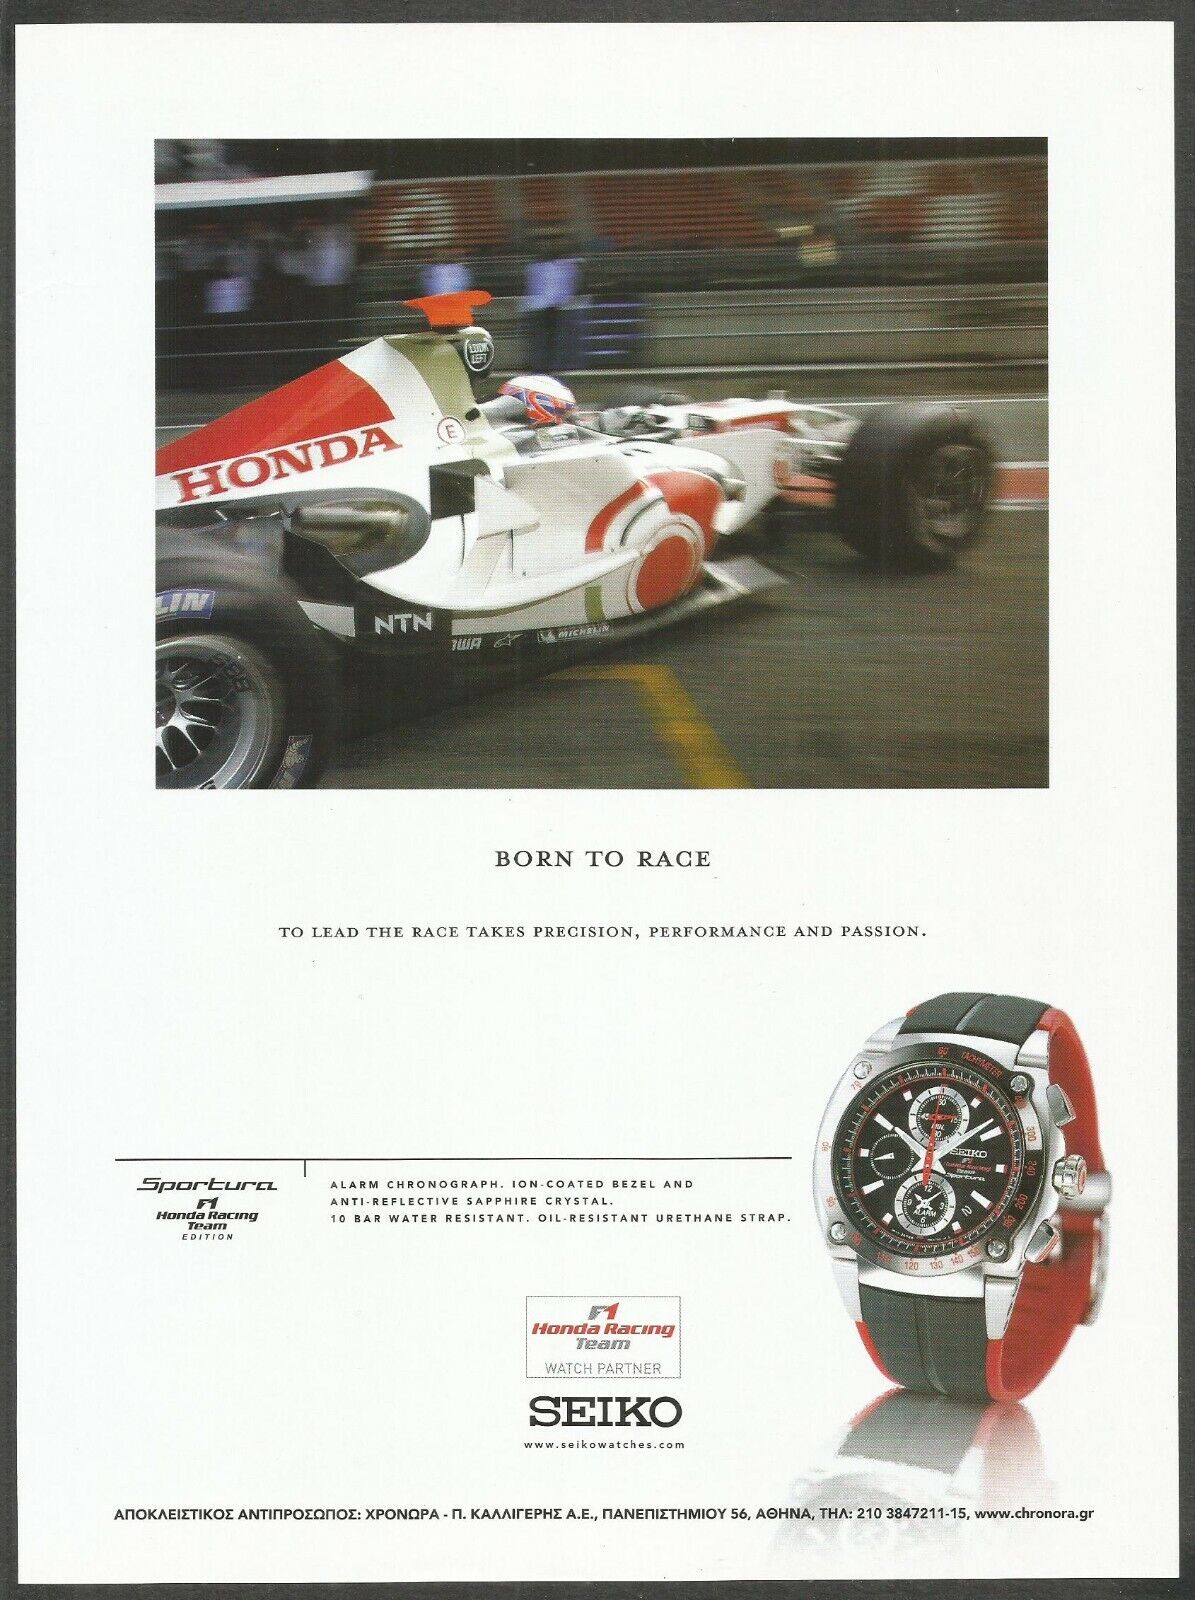 SEIKO Sportura  watch - 2006 Print Ad